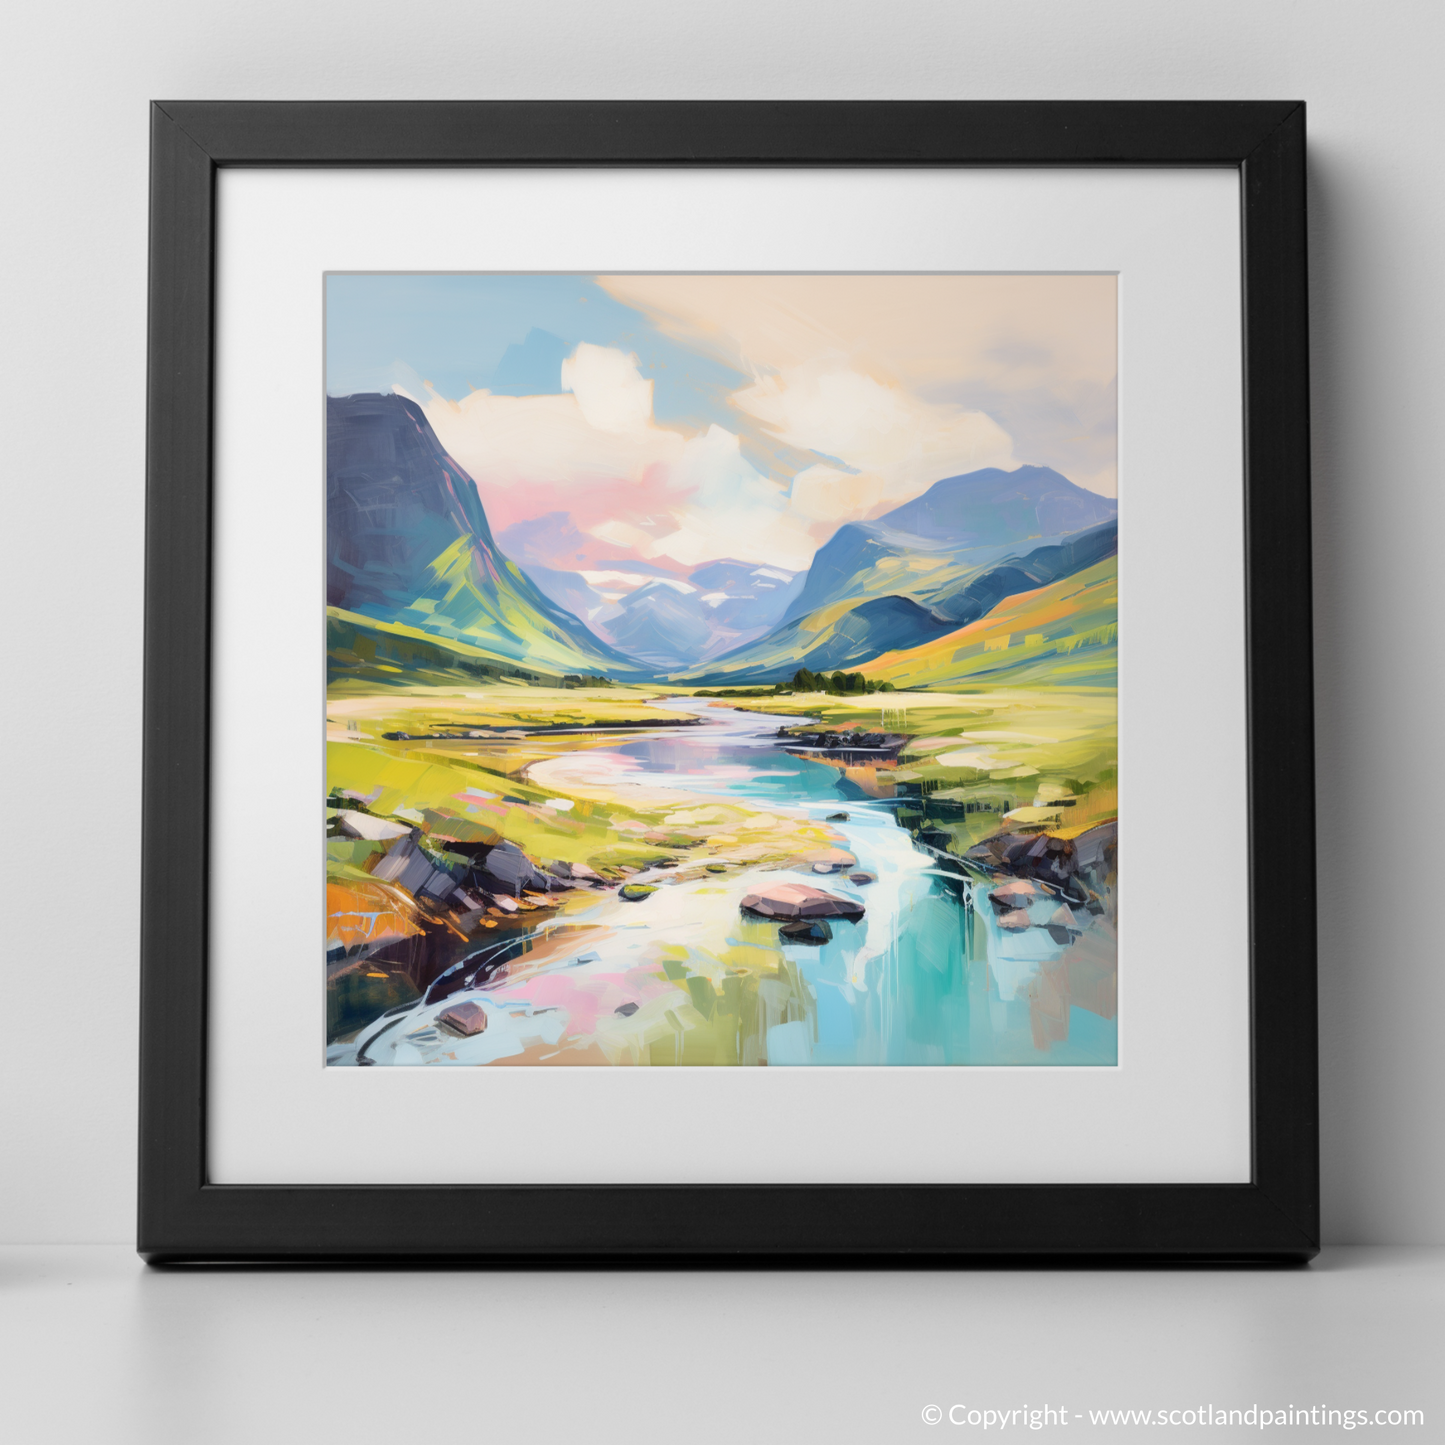 Art Print of Glen Coe, Highlands in summer with a black frame